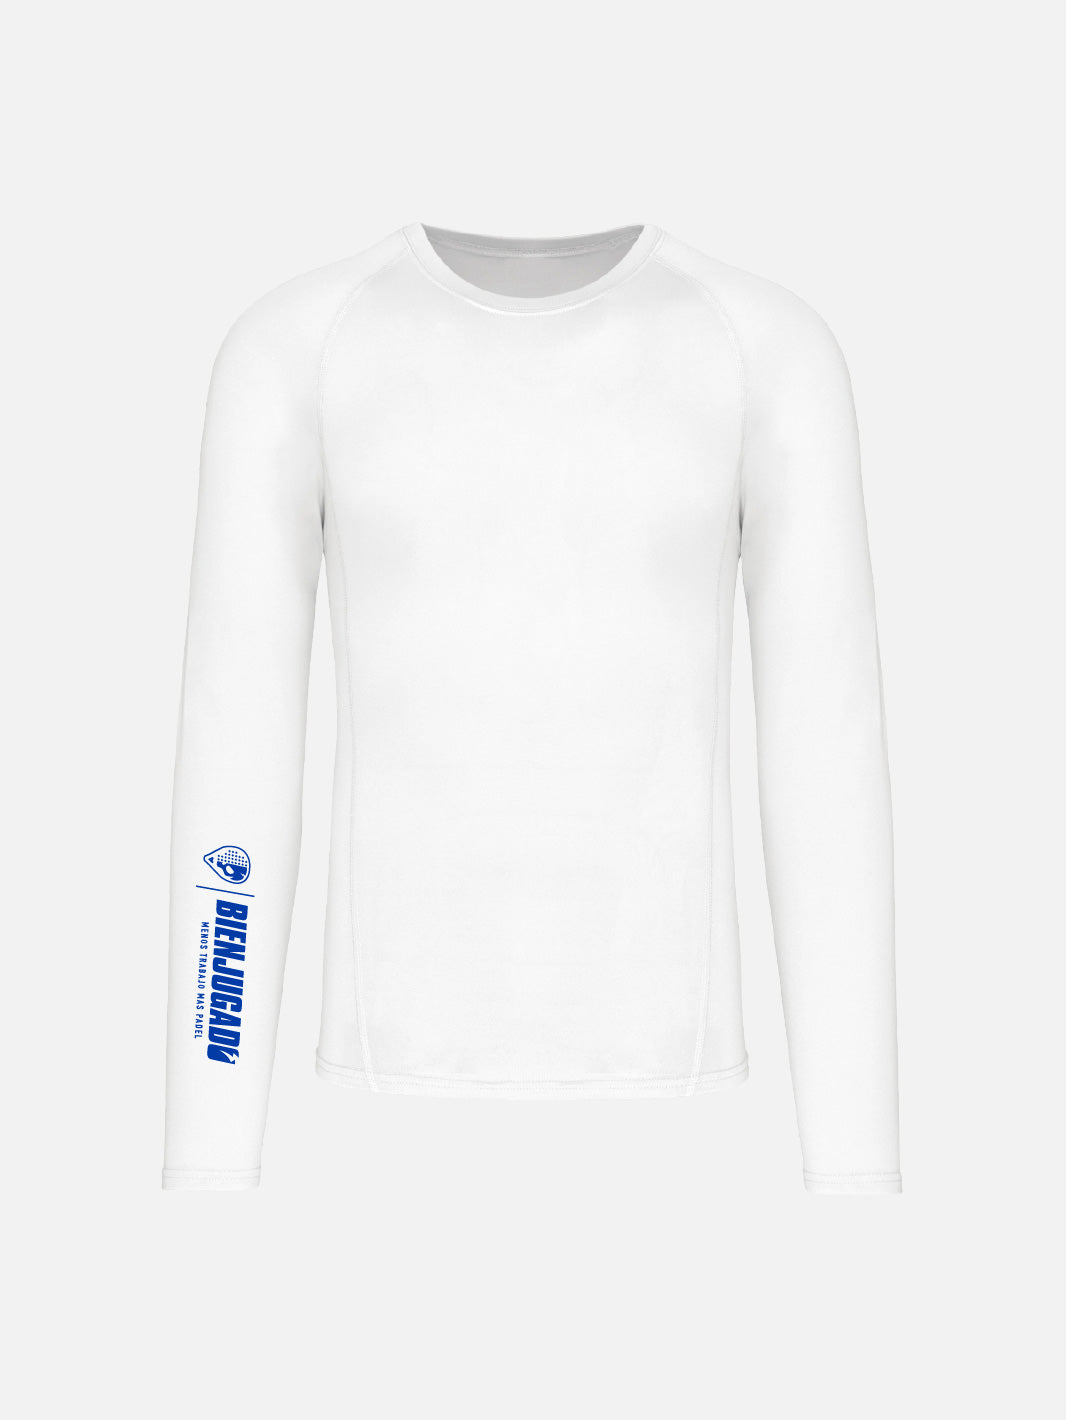 Unisex Thermal Shirt - White